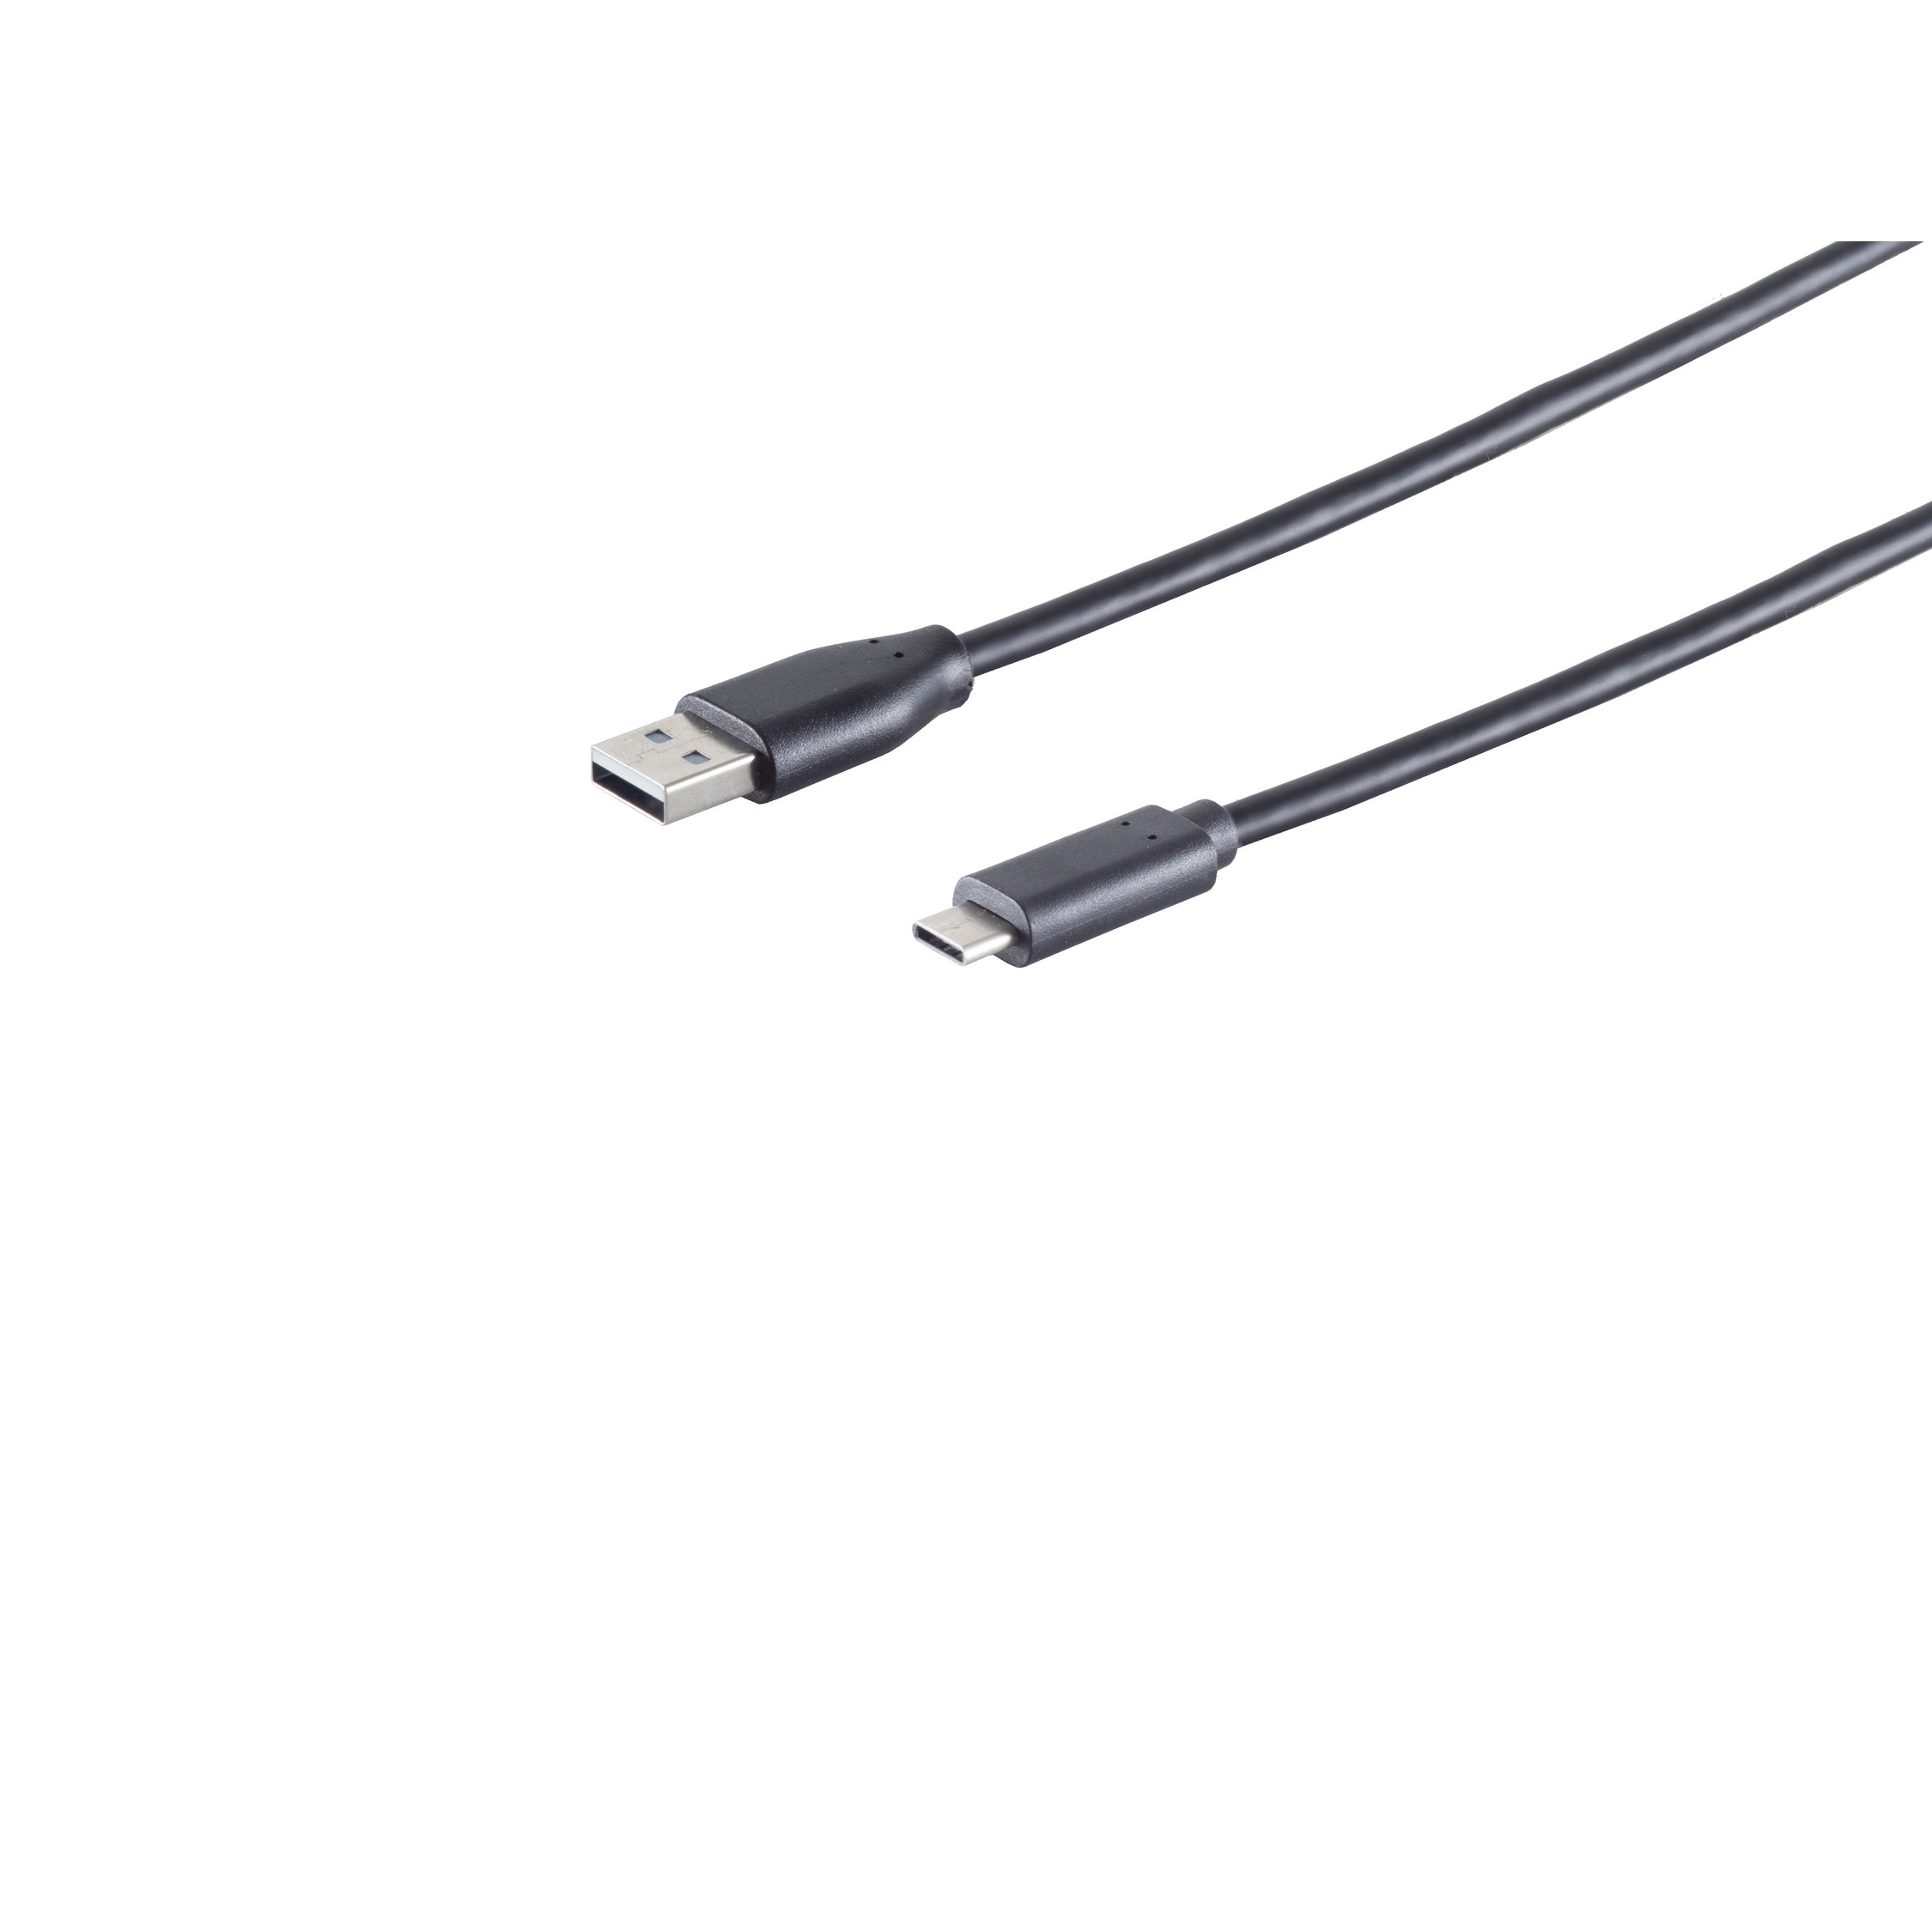 2.0 - Kabel, CONNECTIVITY Kabel A-Stecker, S/CONN 3.1 1,8m USB USB MAXIMUM C-Stecker